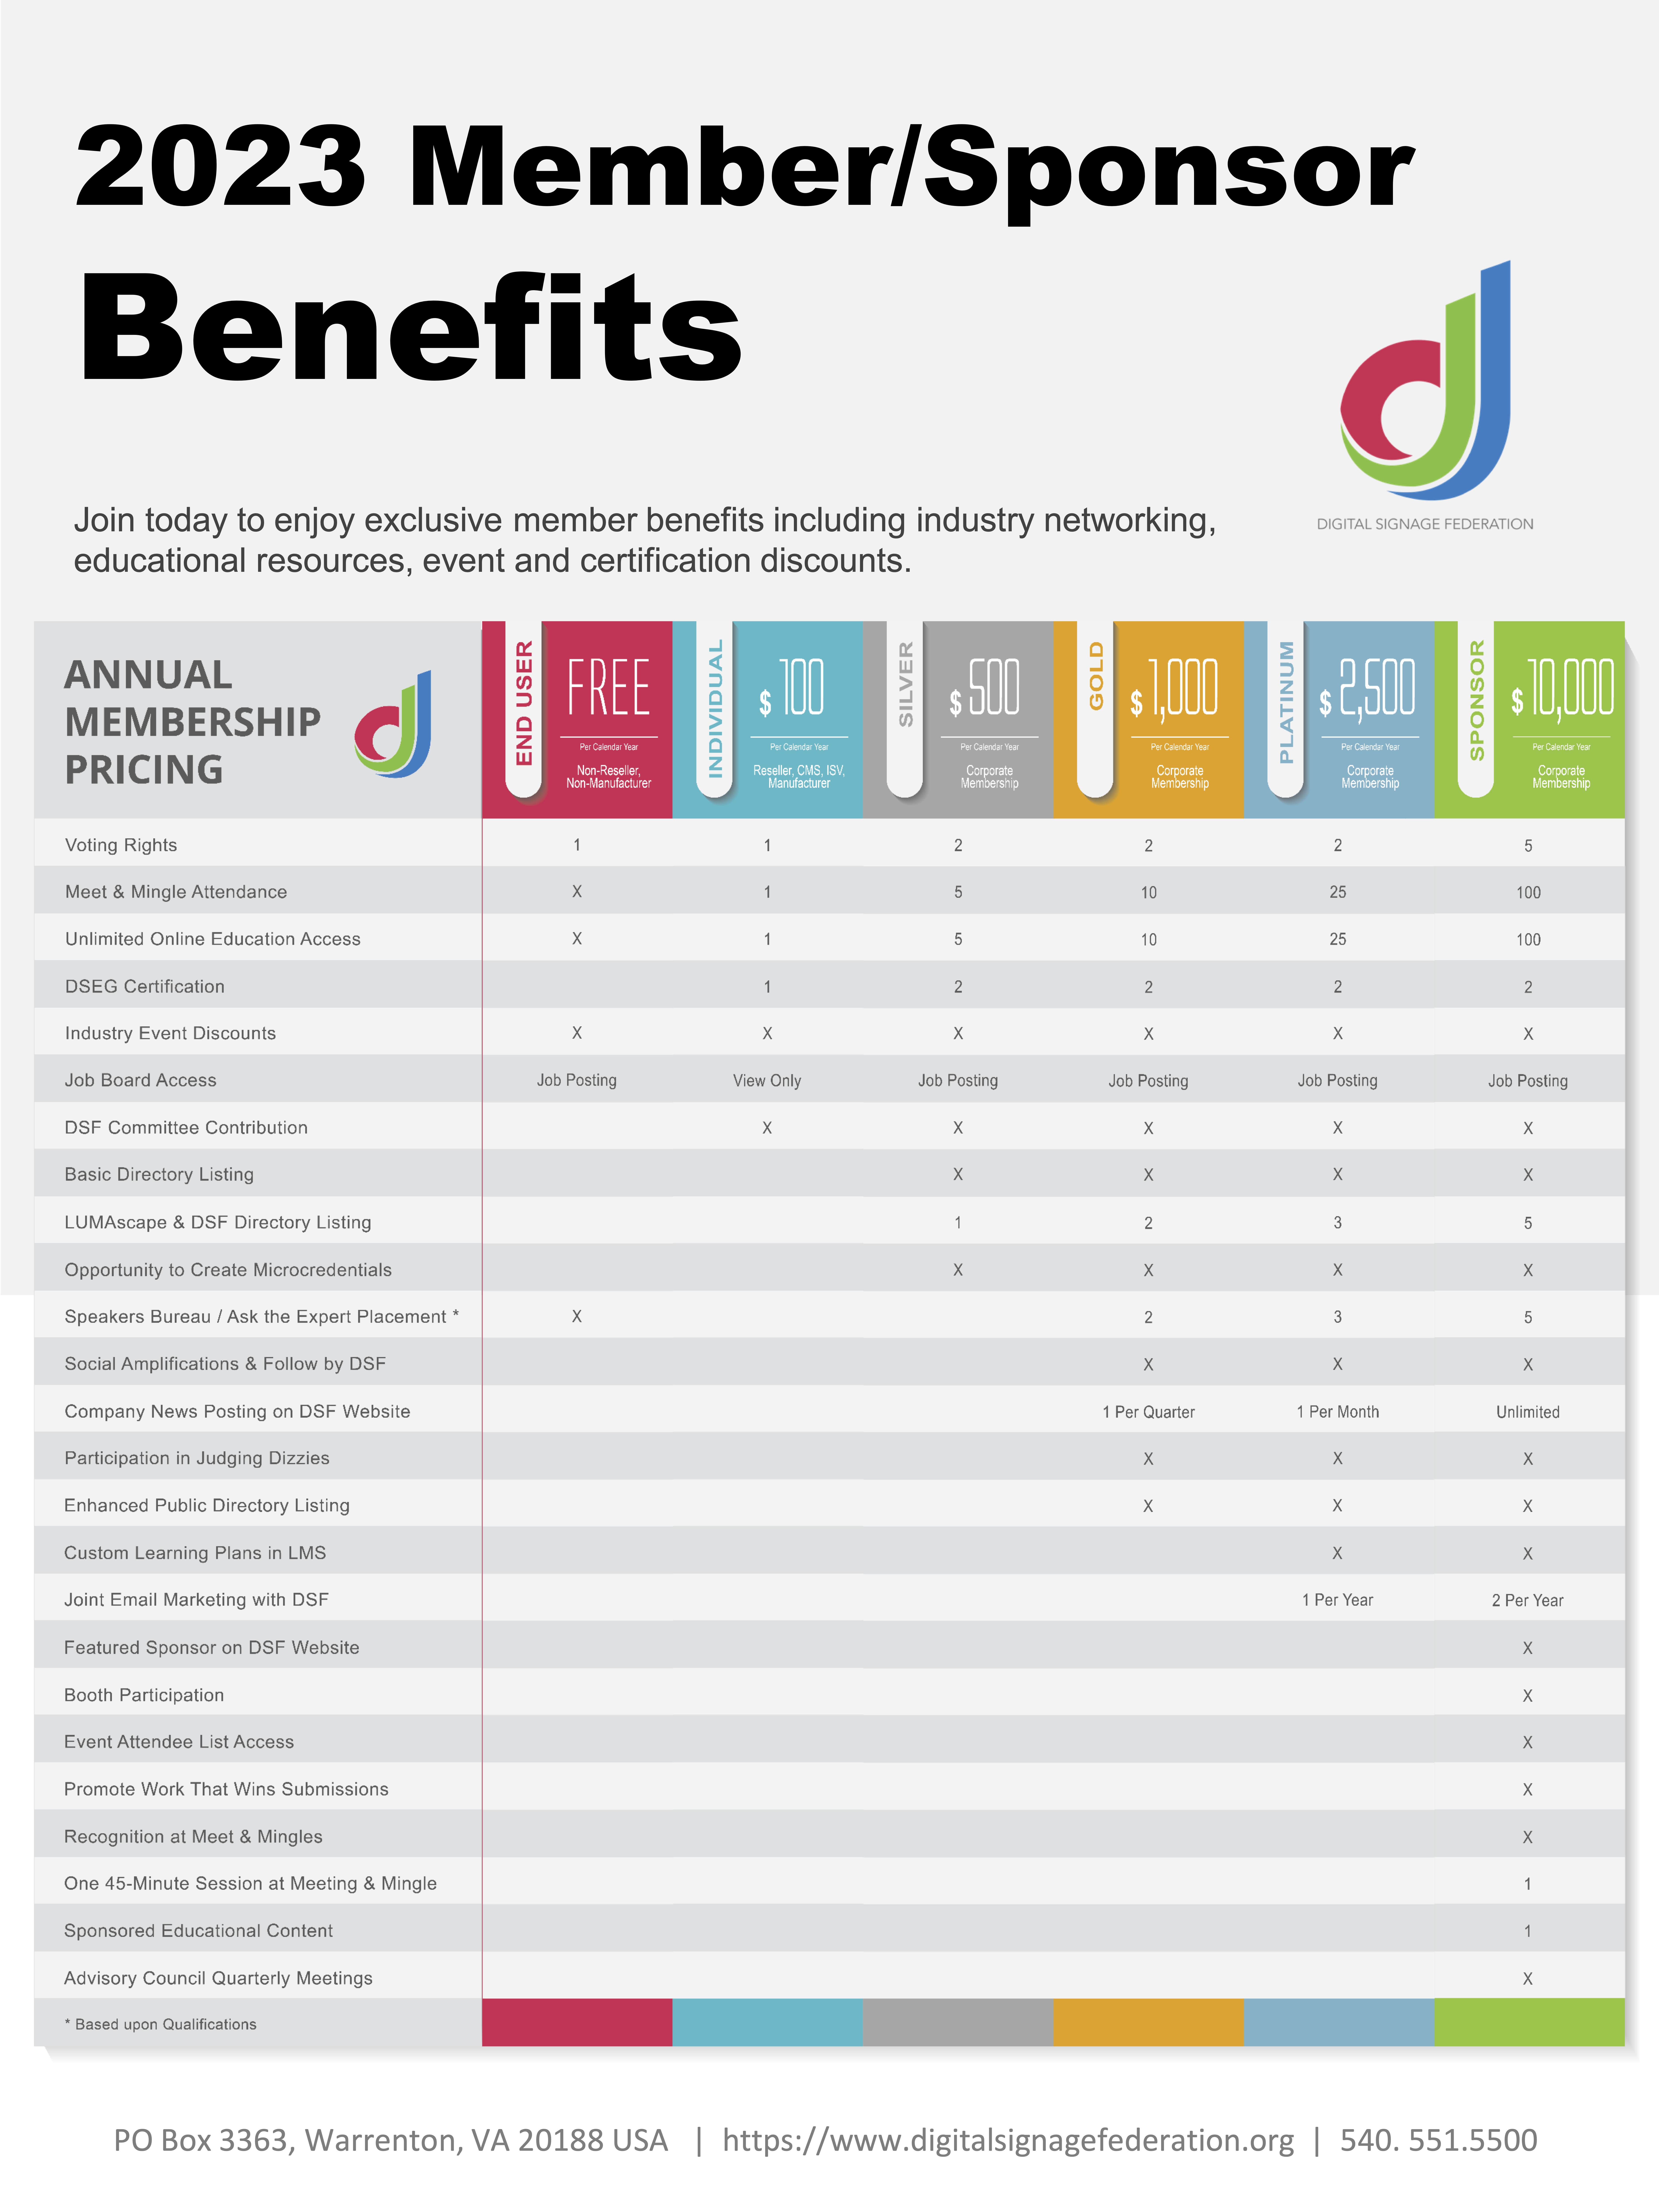 2023 DSF Member & Sponsor Benefits